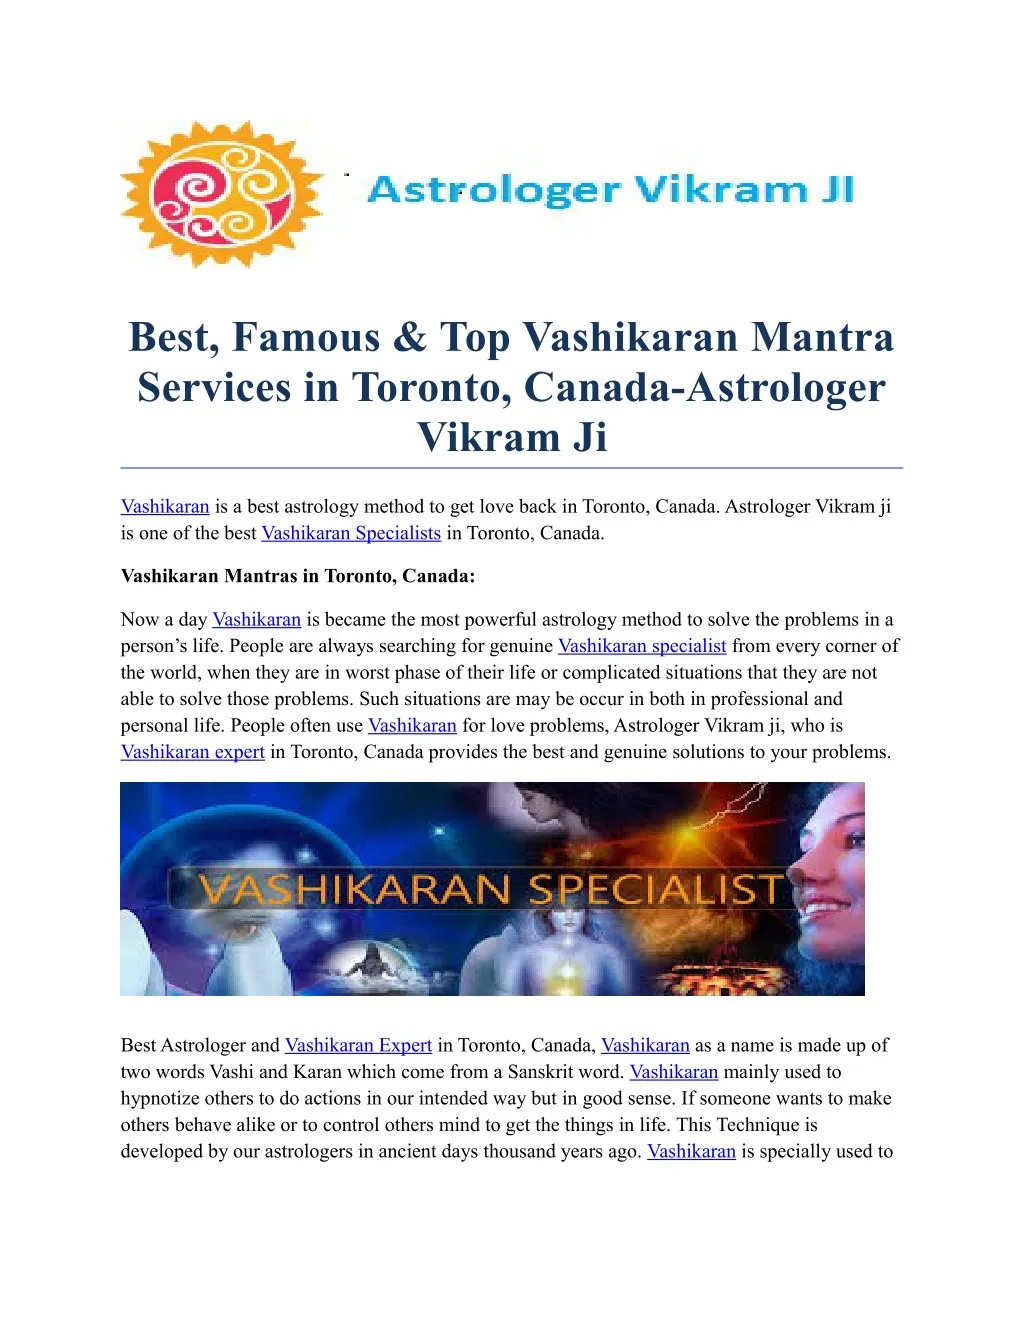 best famous top vashikaran mantra services